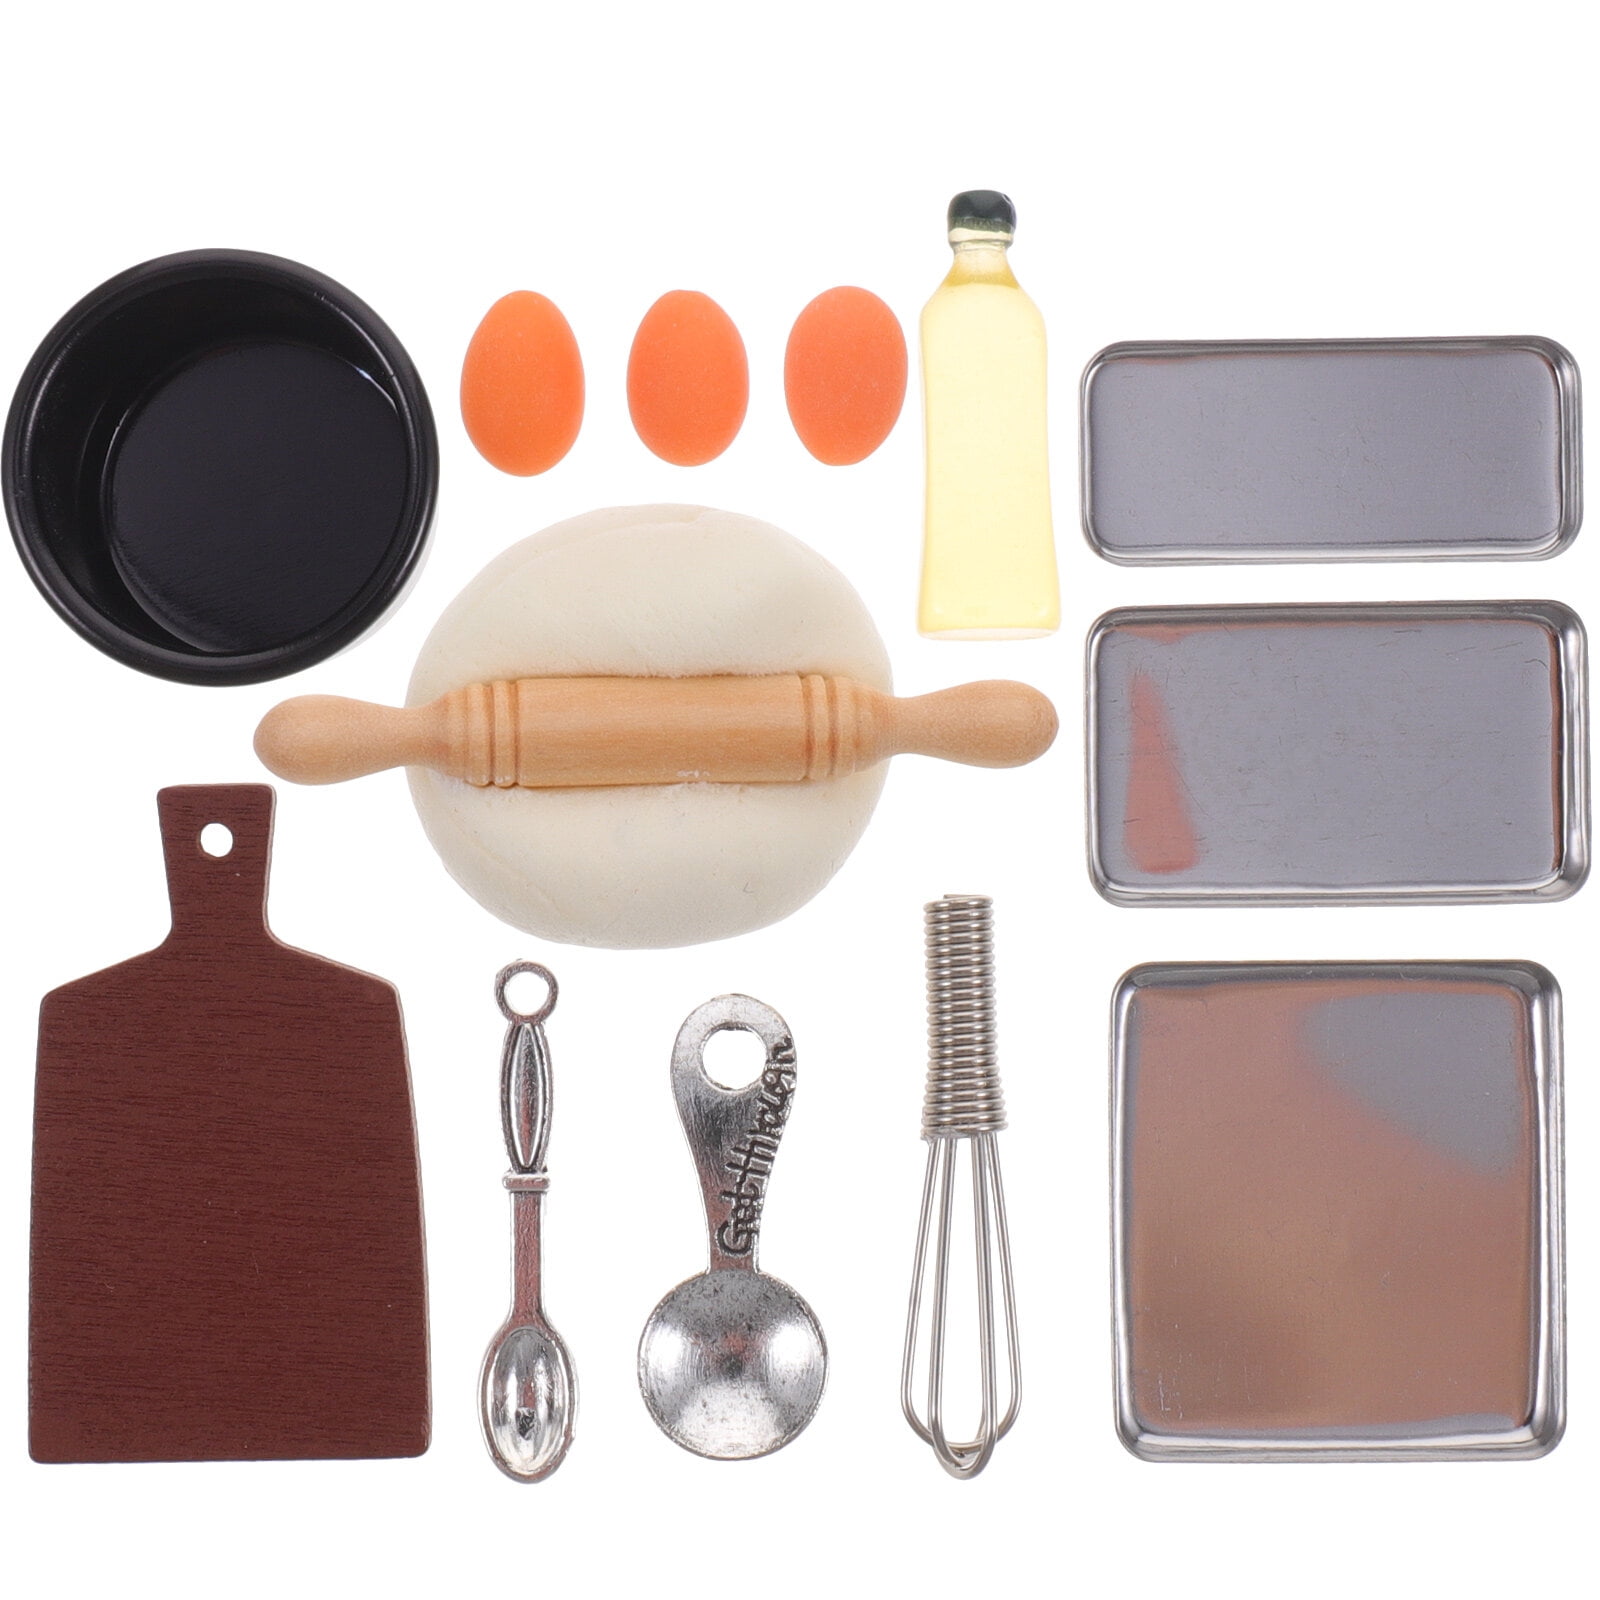 Artboil Mini Cooking Utensils set, 8 Silicone Cooking Supplies, Cupcake  Baking Supplies with Decorating Tools Set, Kitchen Utensils Baking Set for